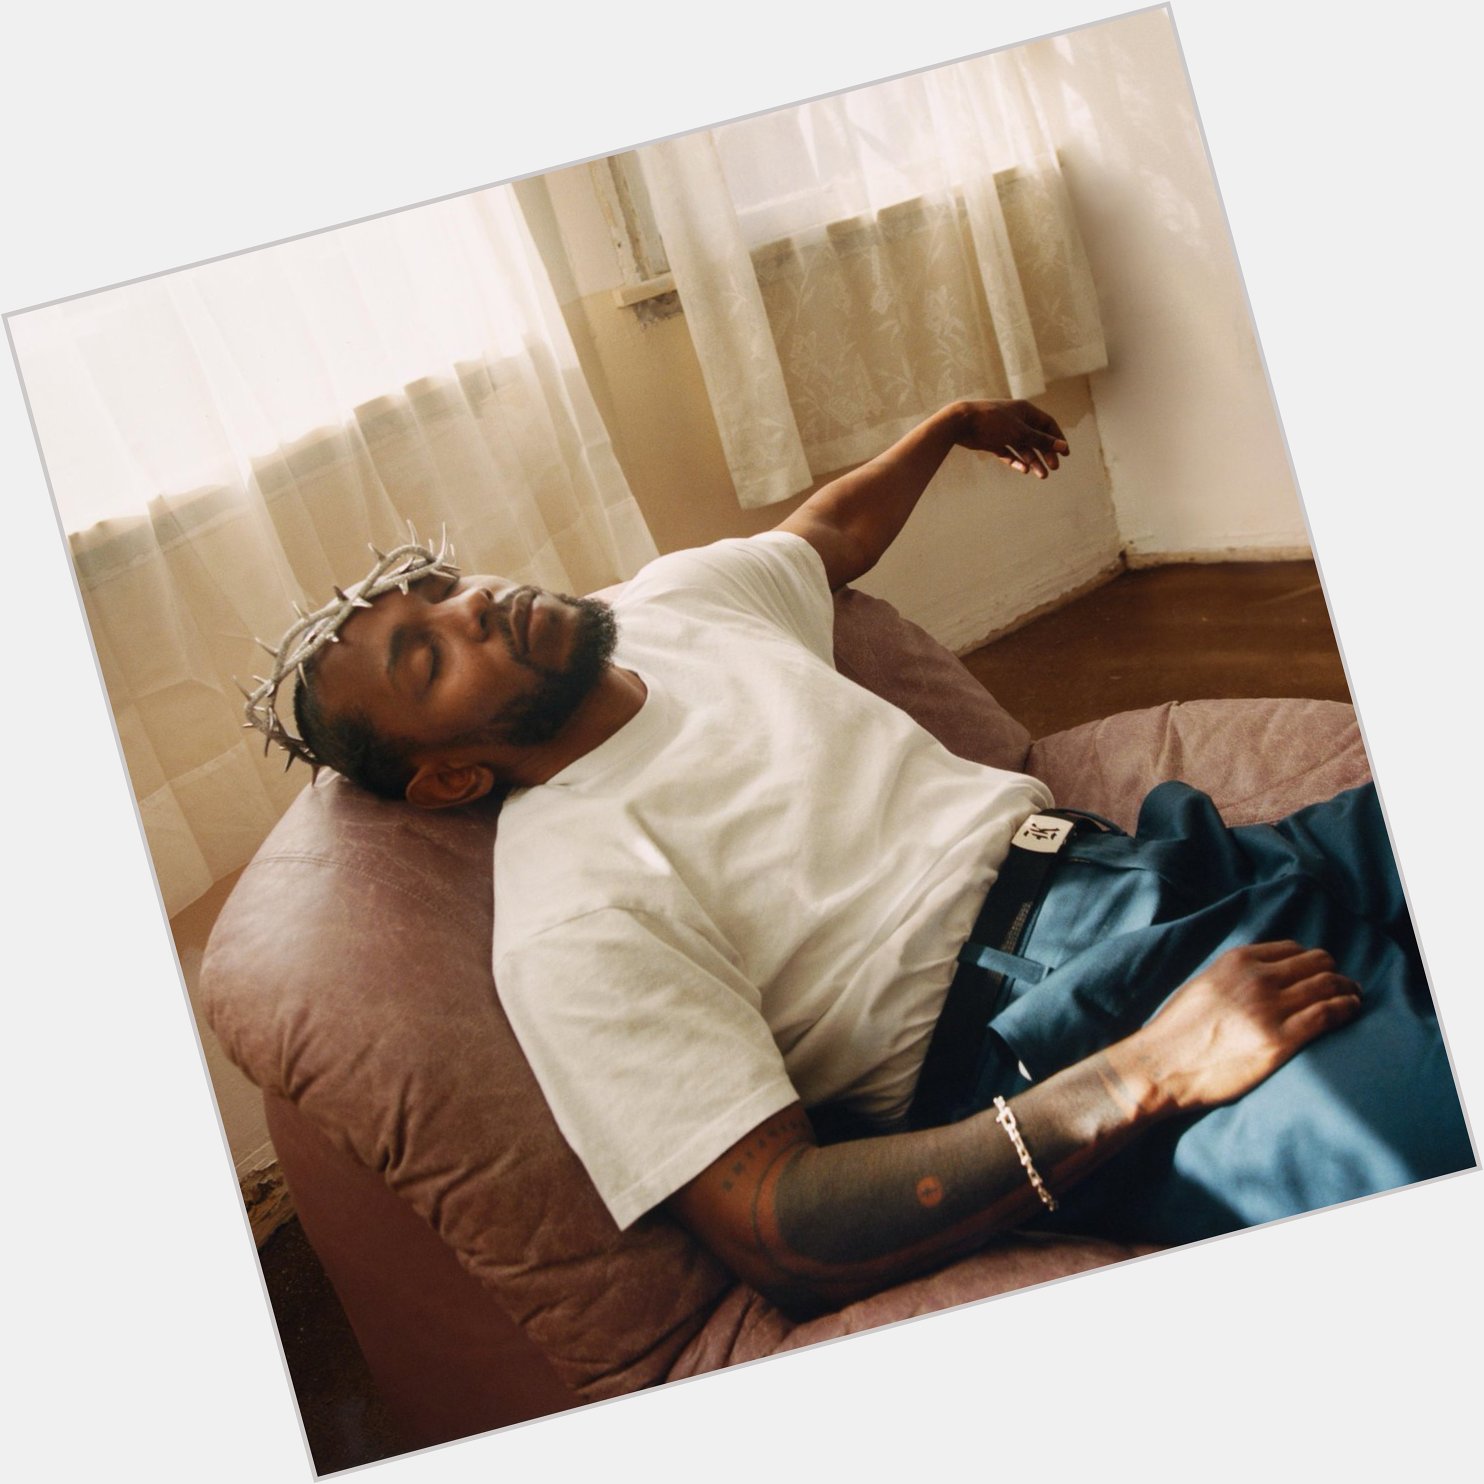 Happy 35th birthday to Kendrick Lamar. 